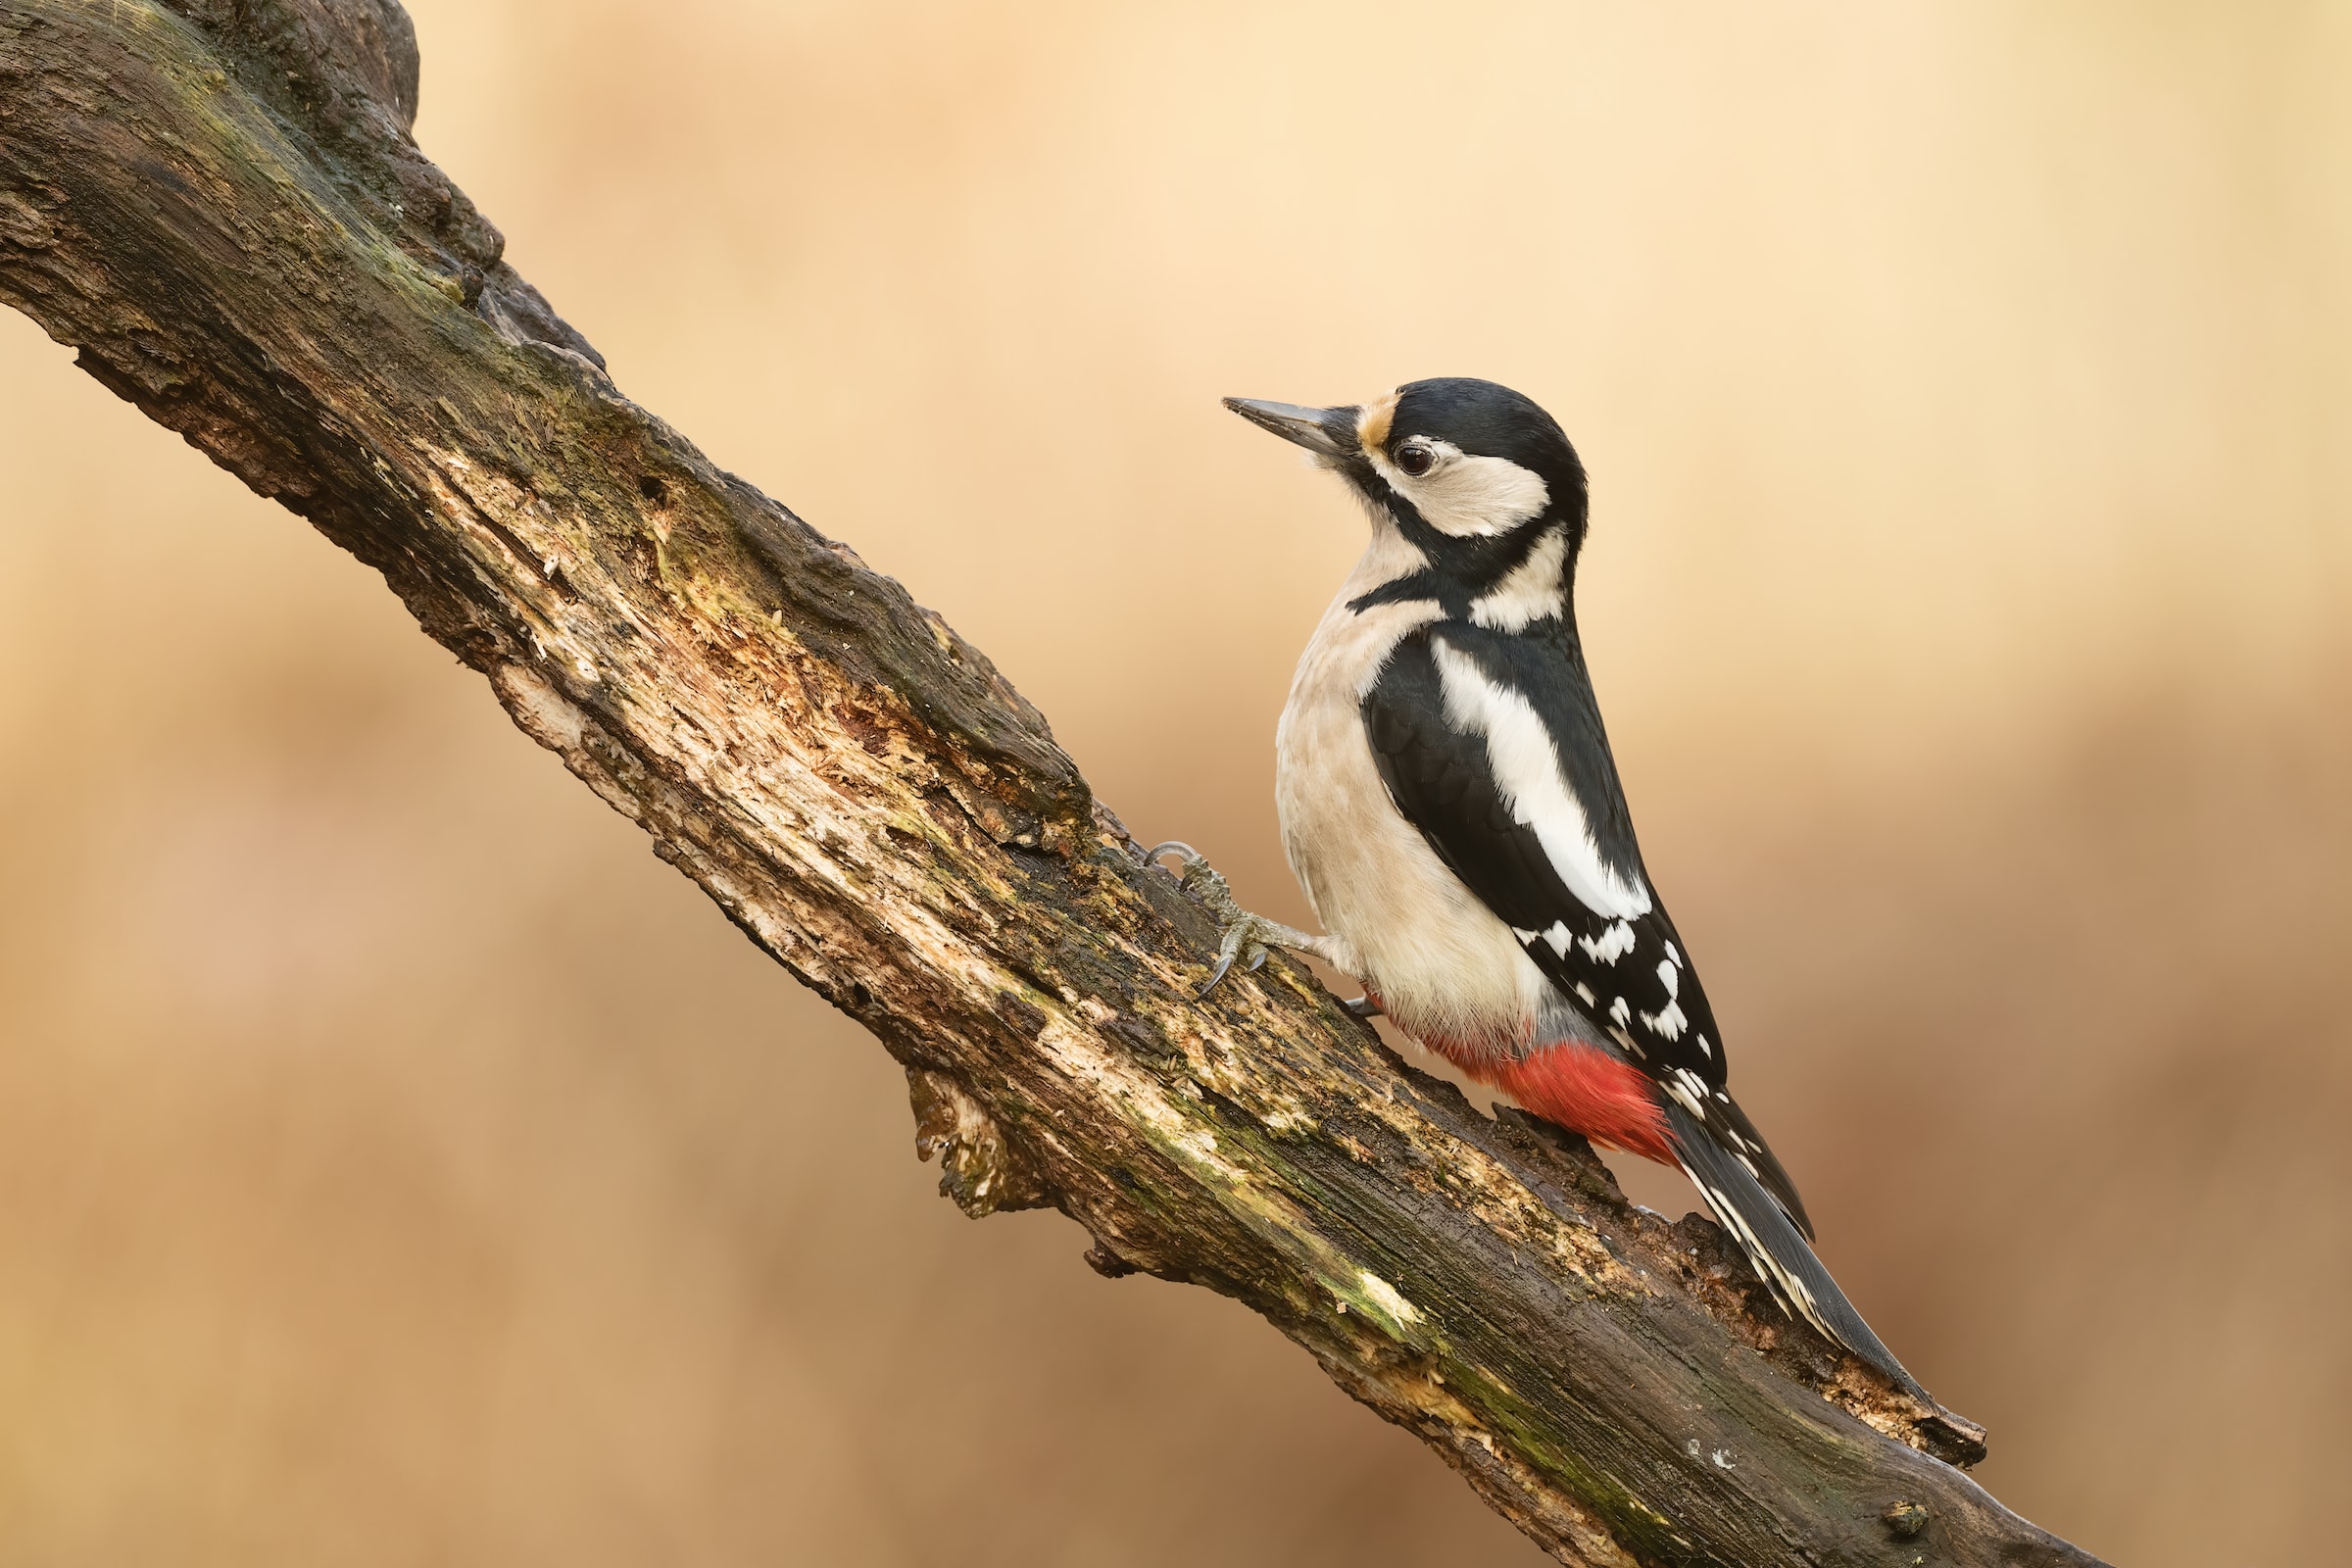 A woodpecker on a tree